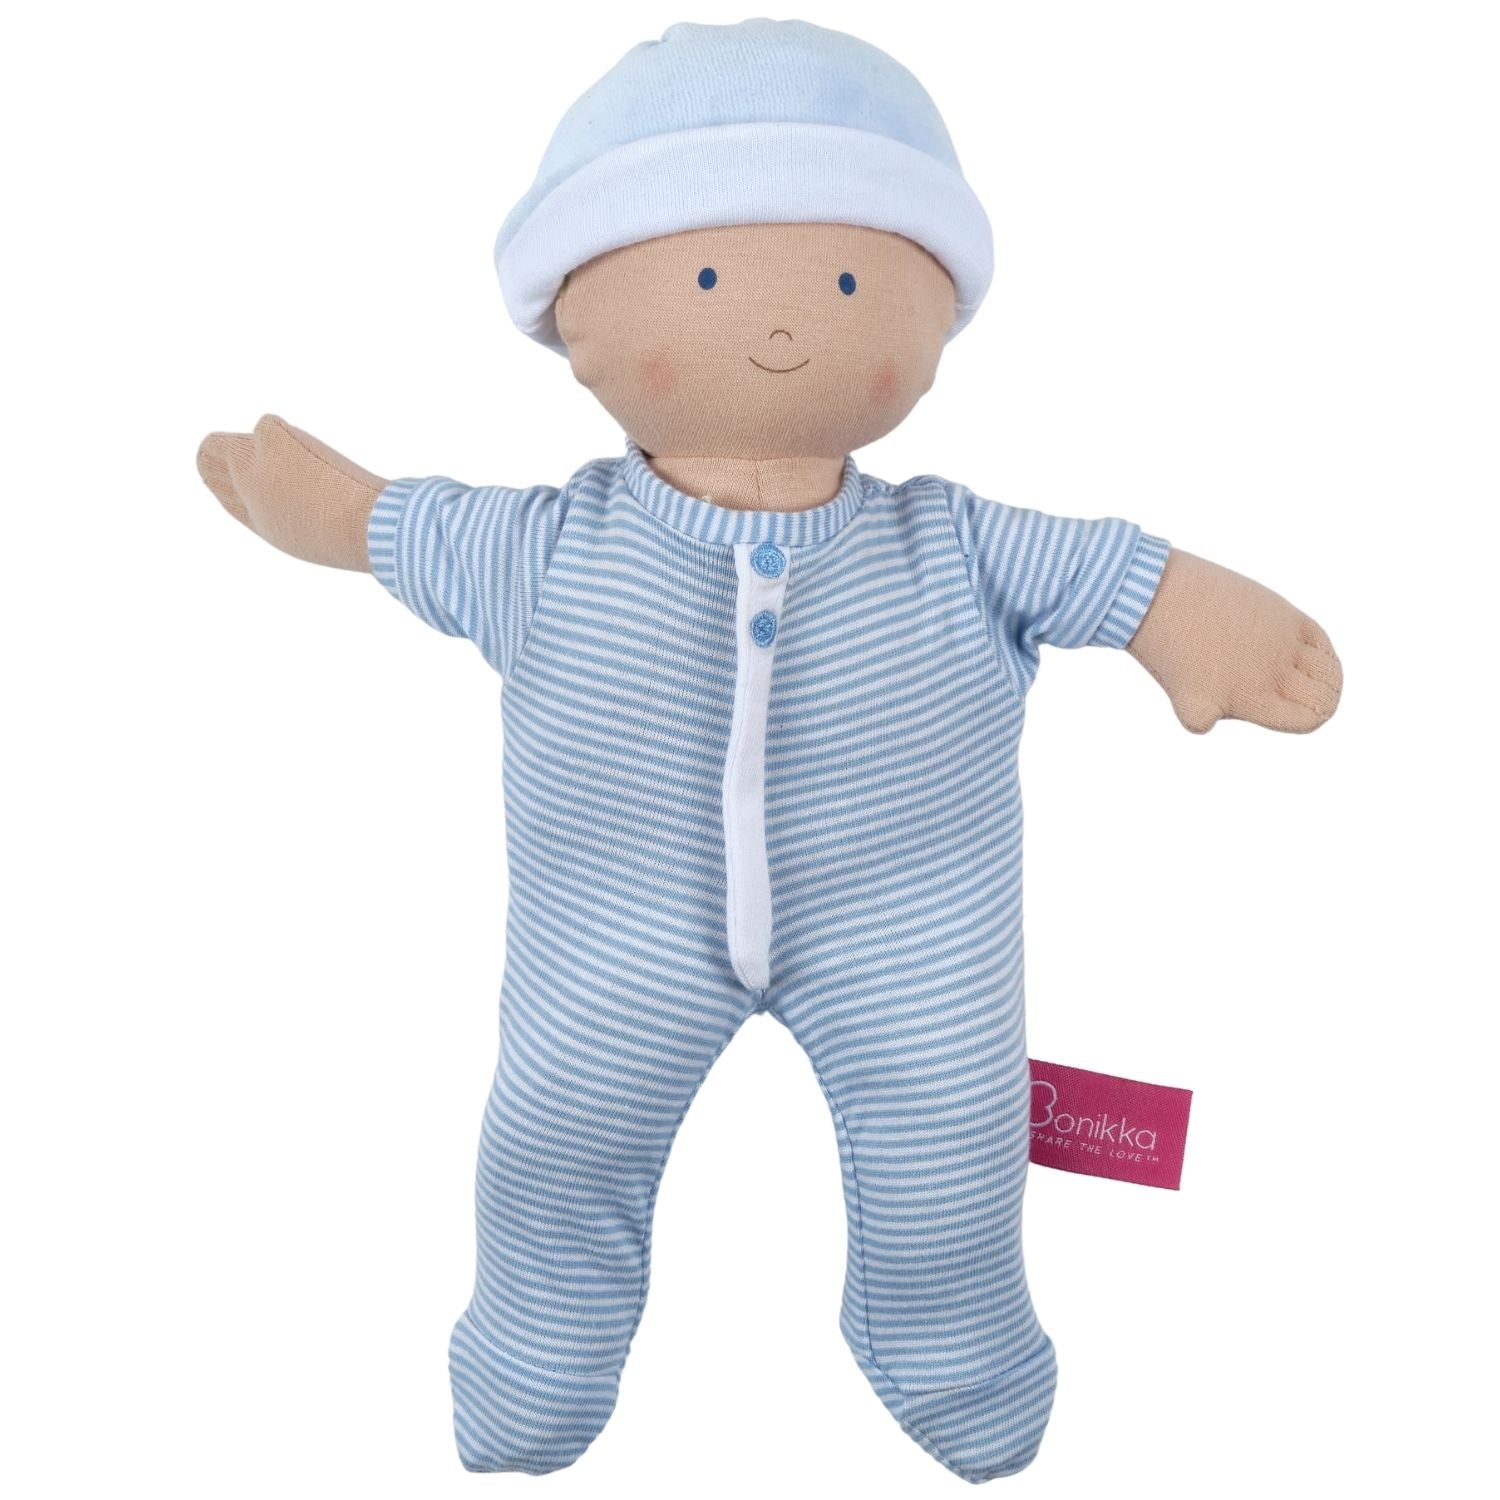 Bonikka Cherub Baby Boy Doll in Blue Outfit